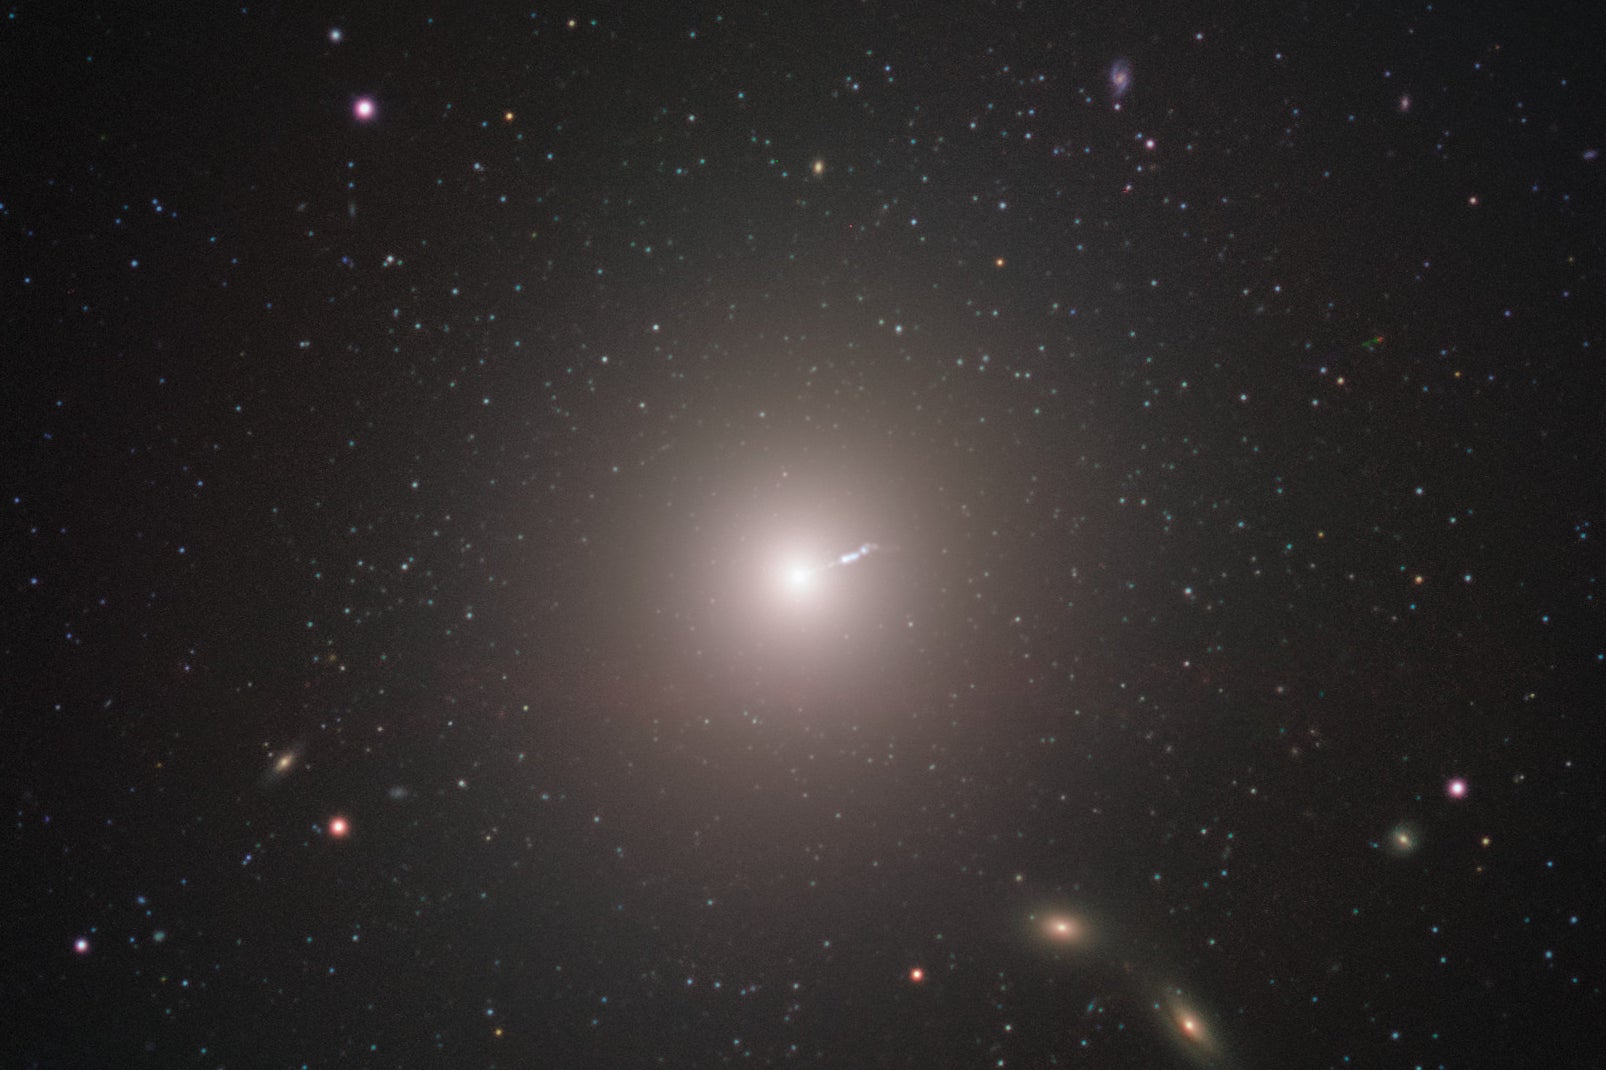 Messier 87 (M87) is an enormous elliptical galaxy